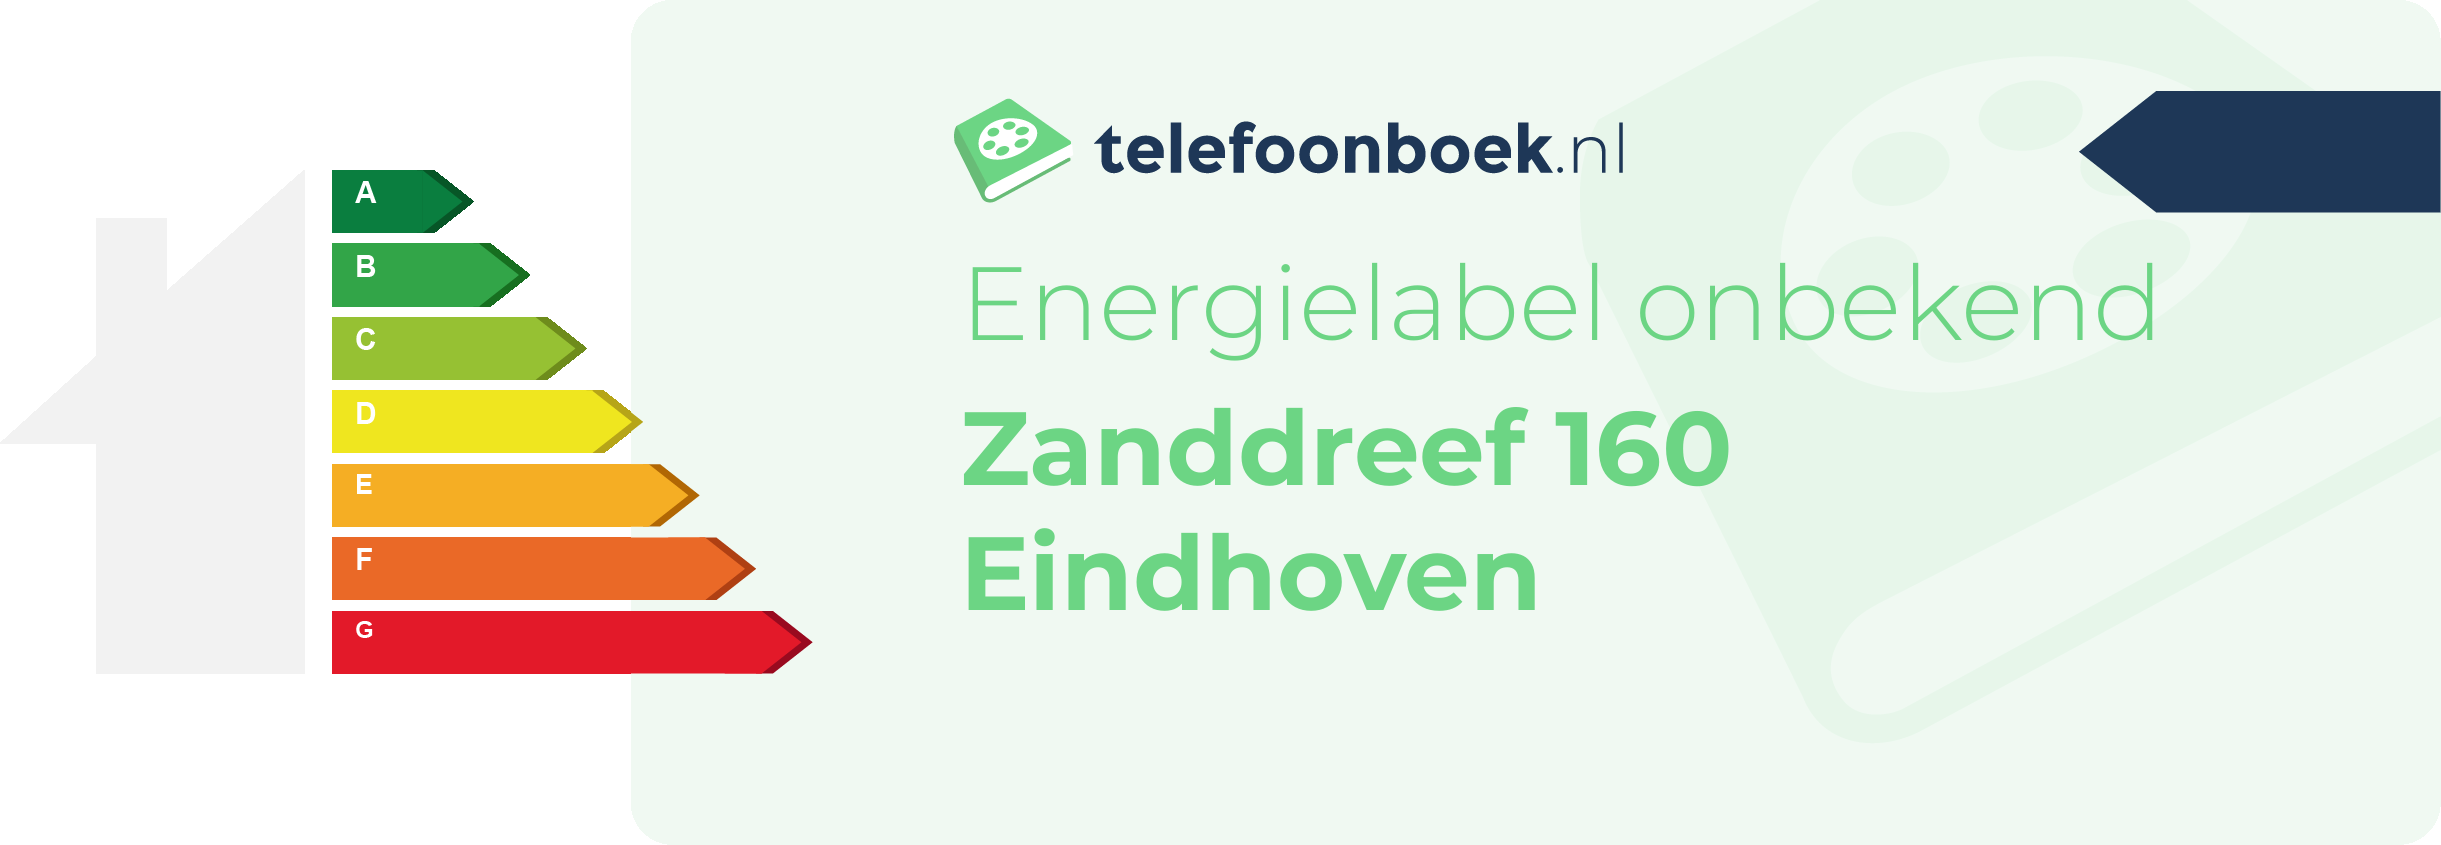 Energielabel Zanddreef 160 Eindhoven